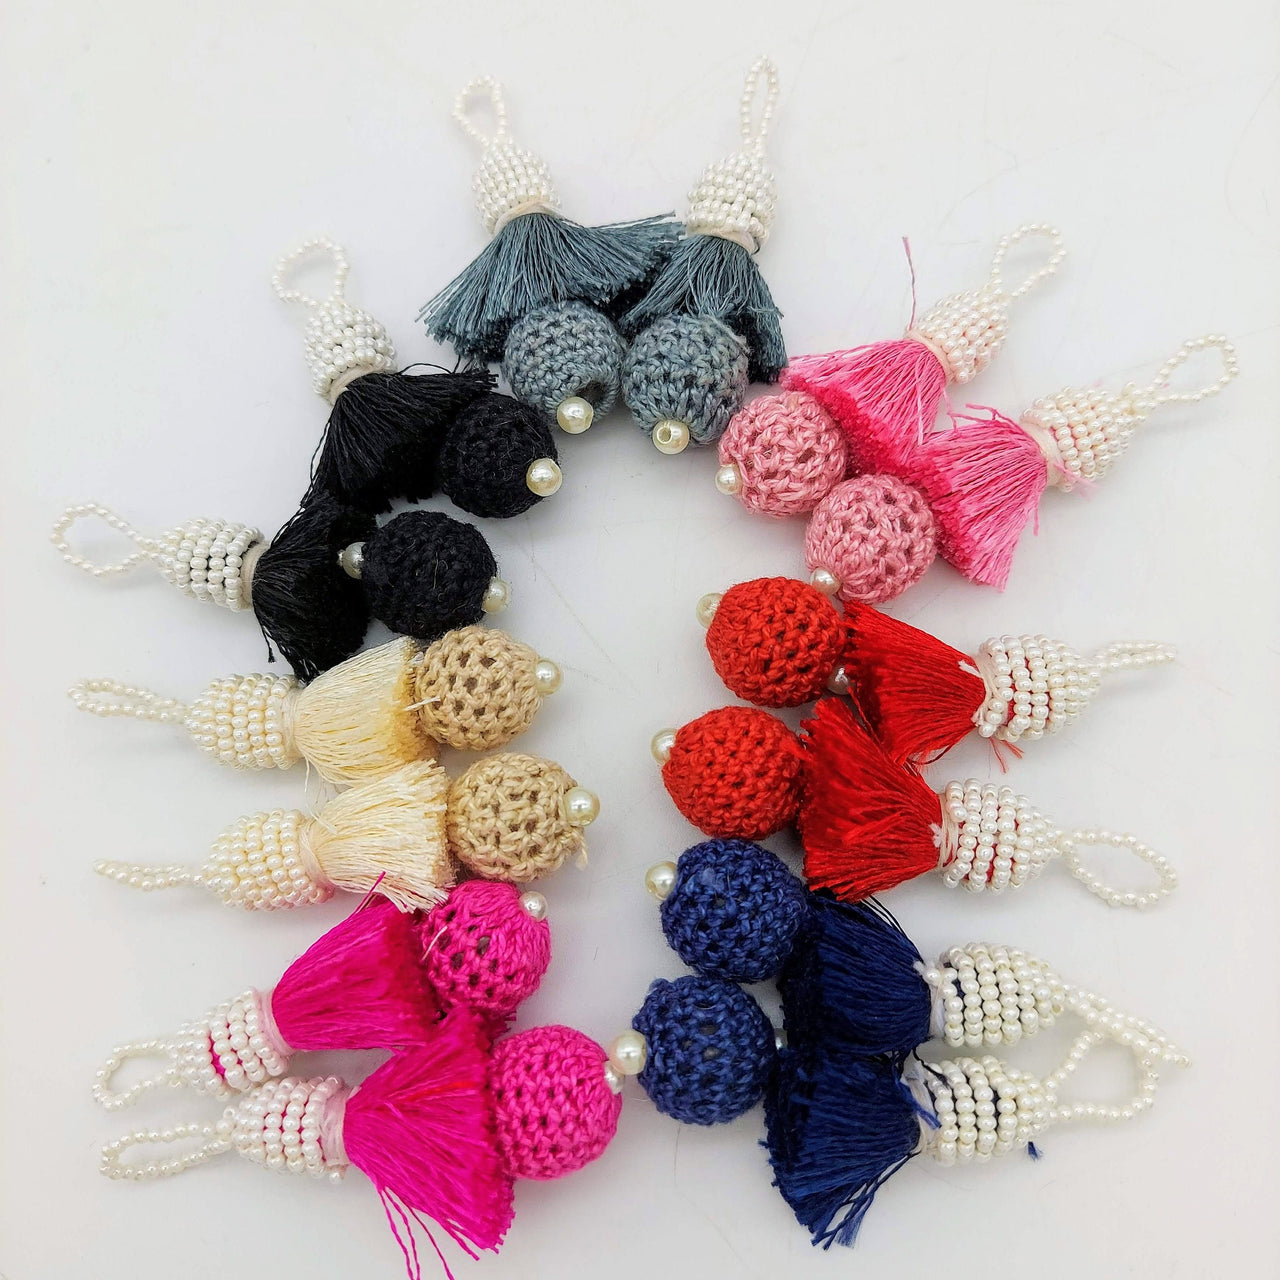 Beige Crochet Ball Tassels With White Pearls Beads, Tassel Charms, Nylon Tassels x 2